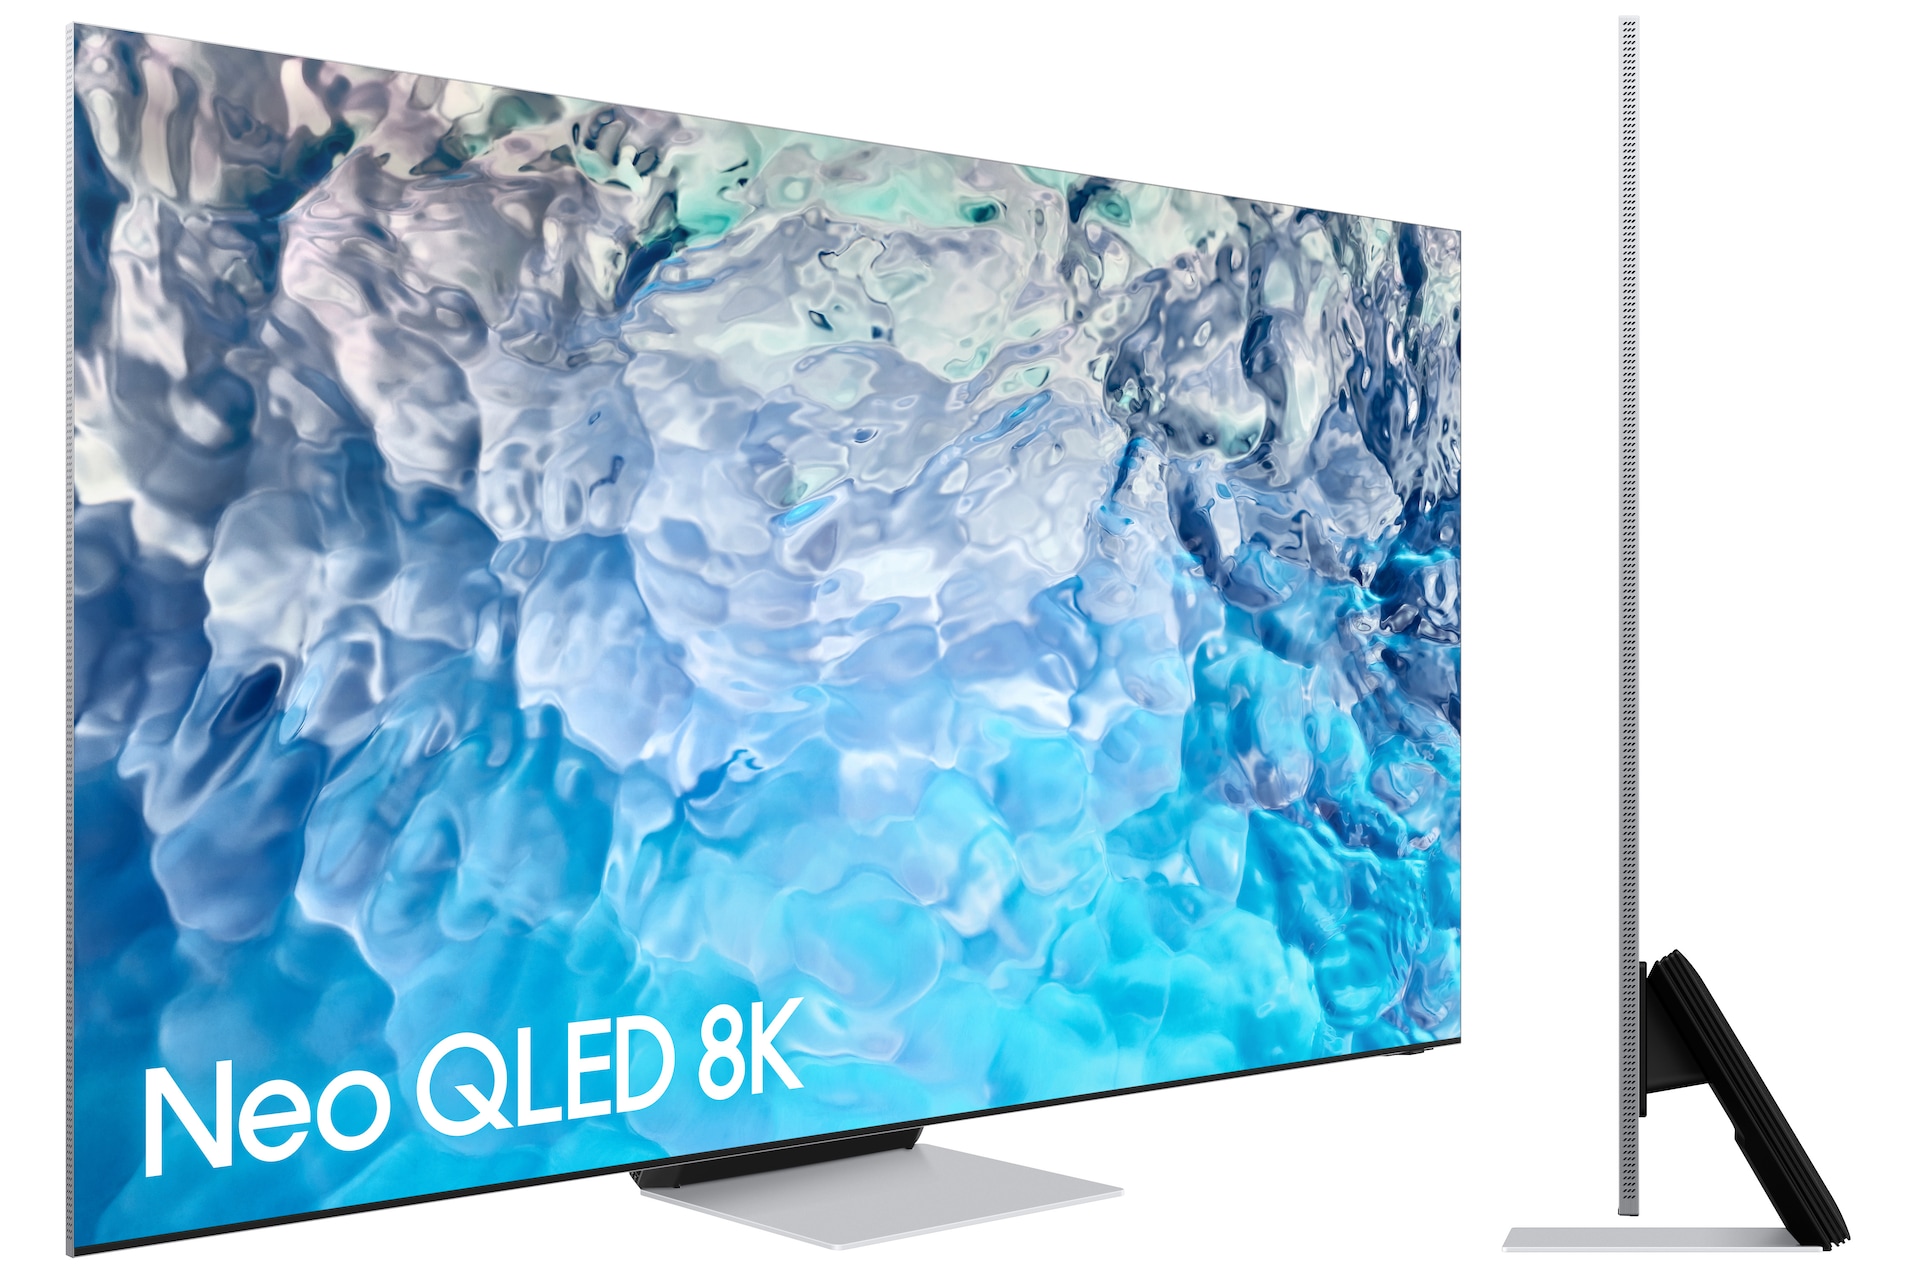 Samsung Pantalla 65” NEO QLED 4K UHD Smart TV